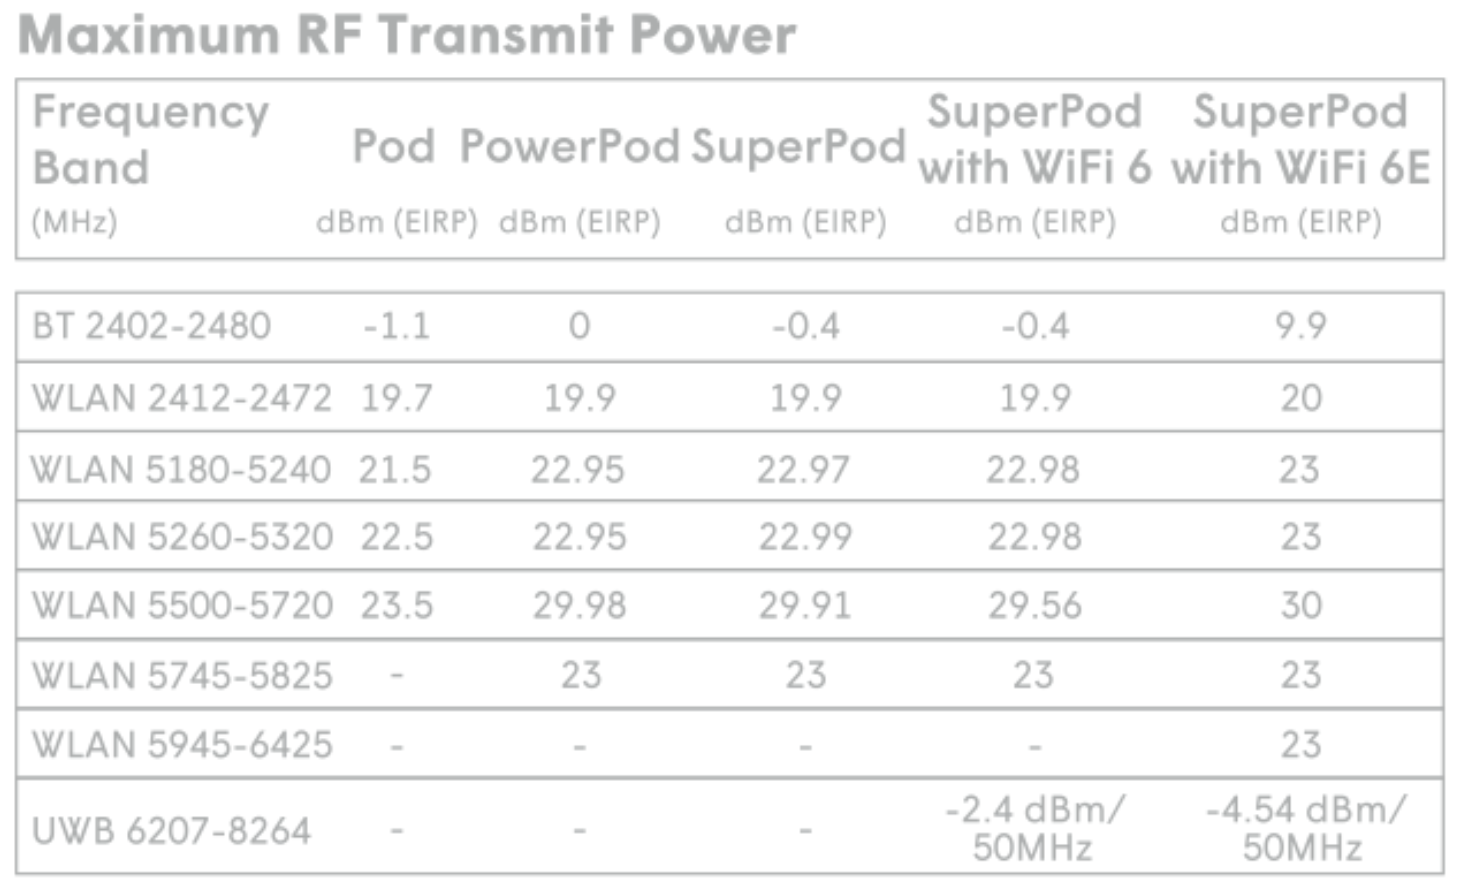 Max RF Transmit Power